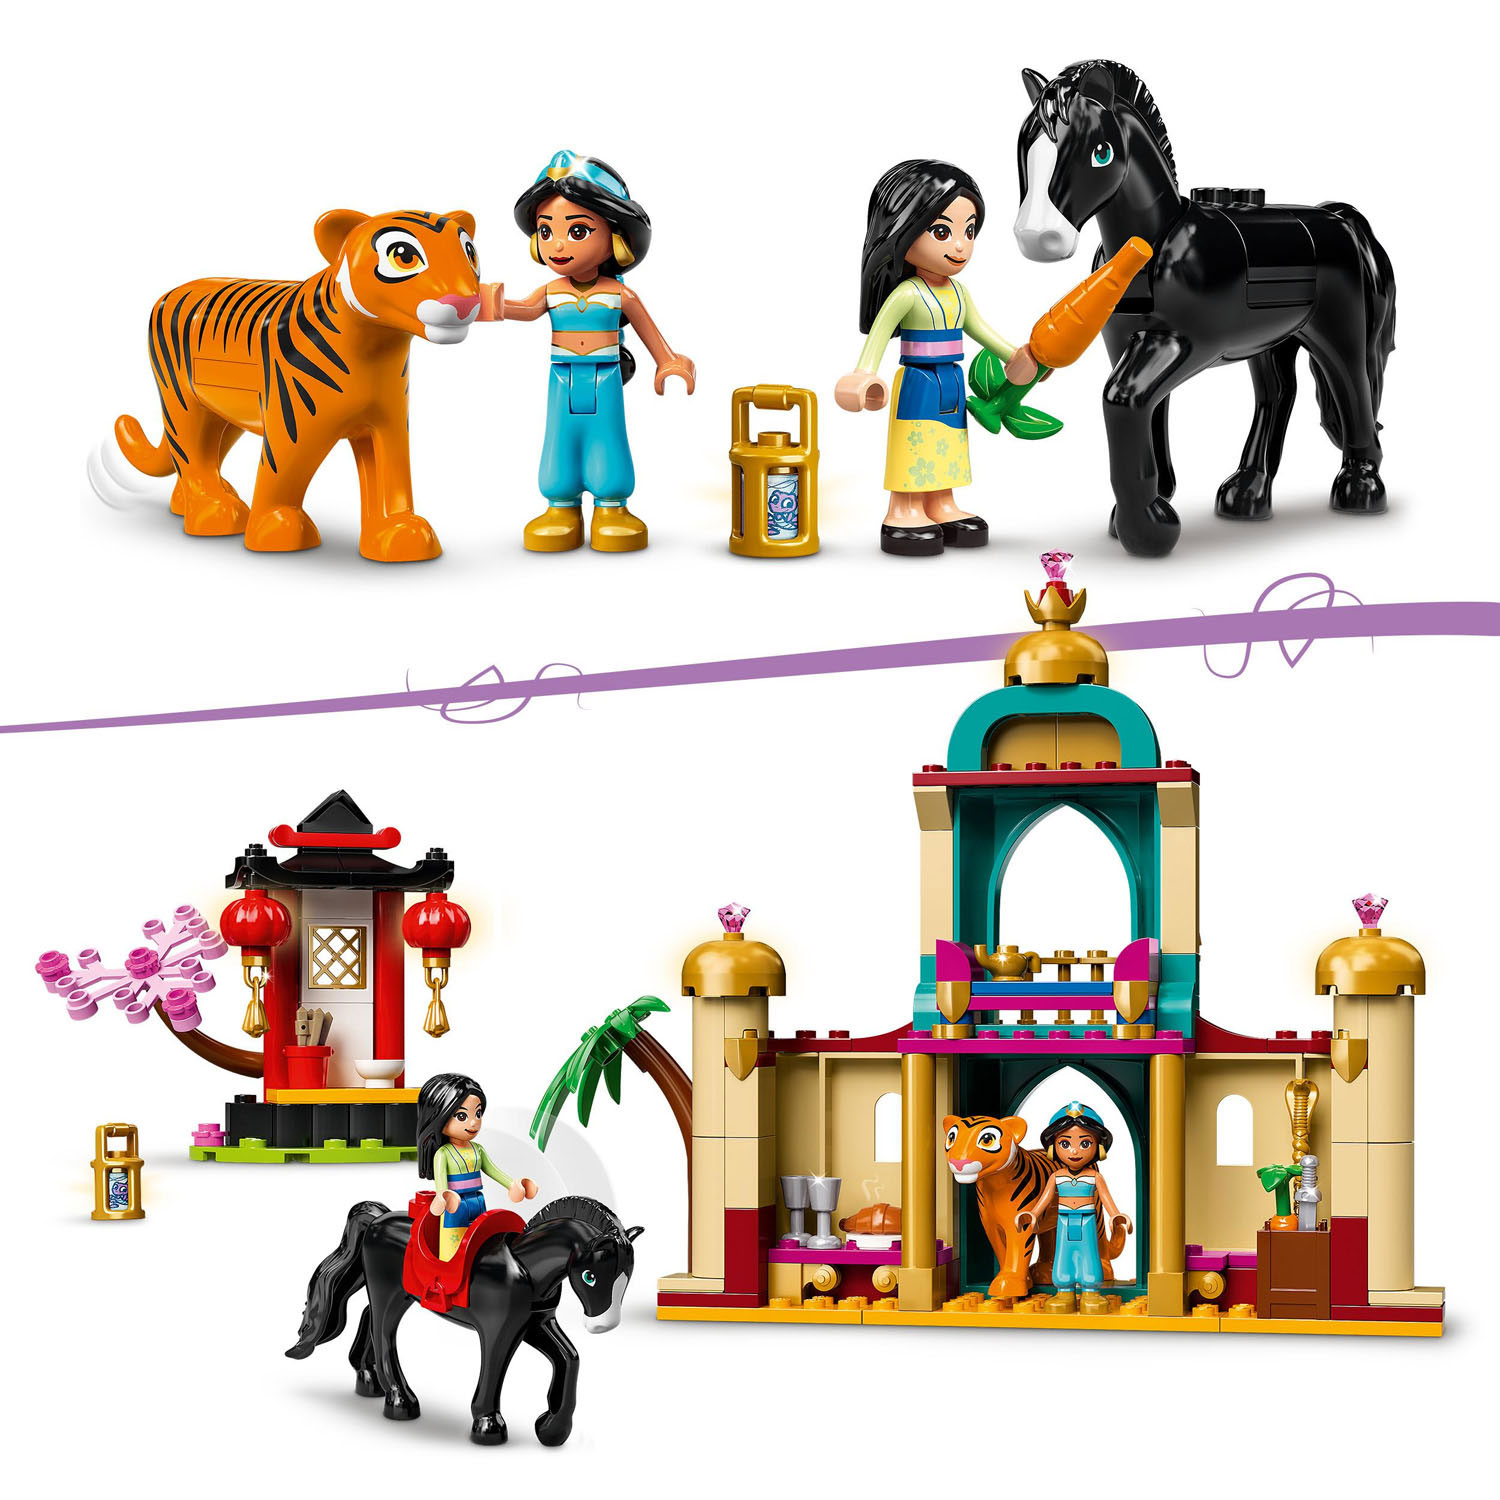 LEGO Princesse Disney 43208 Jasmine et l'aventure de Mulan